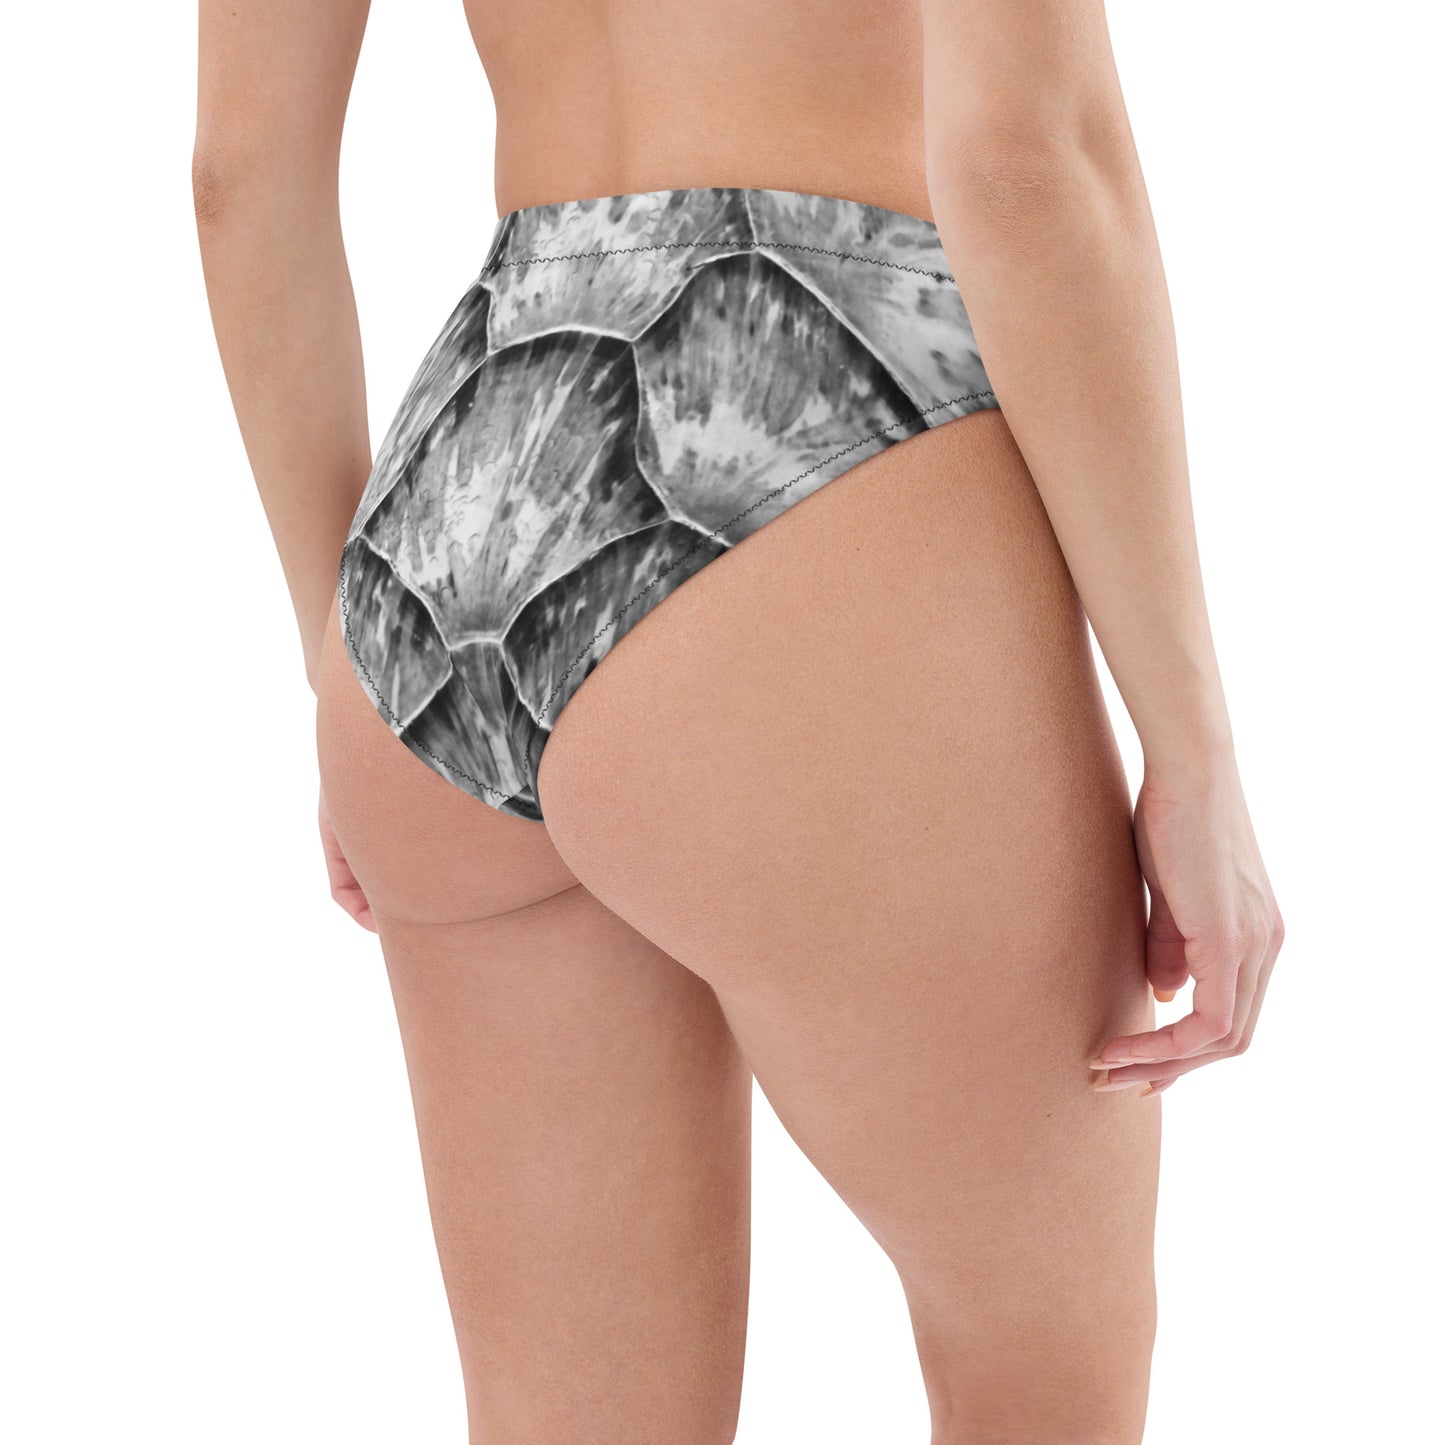 Rockley Recycled high-waisted bikini bottom